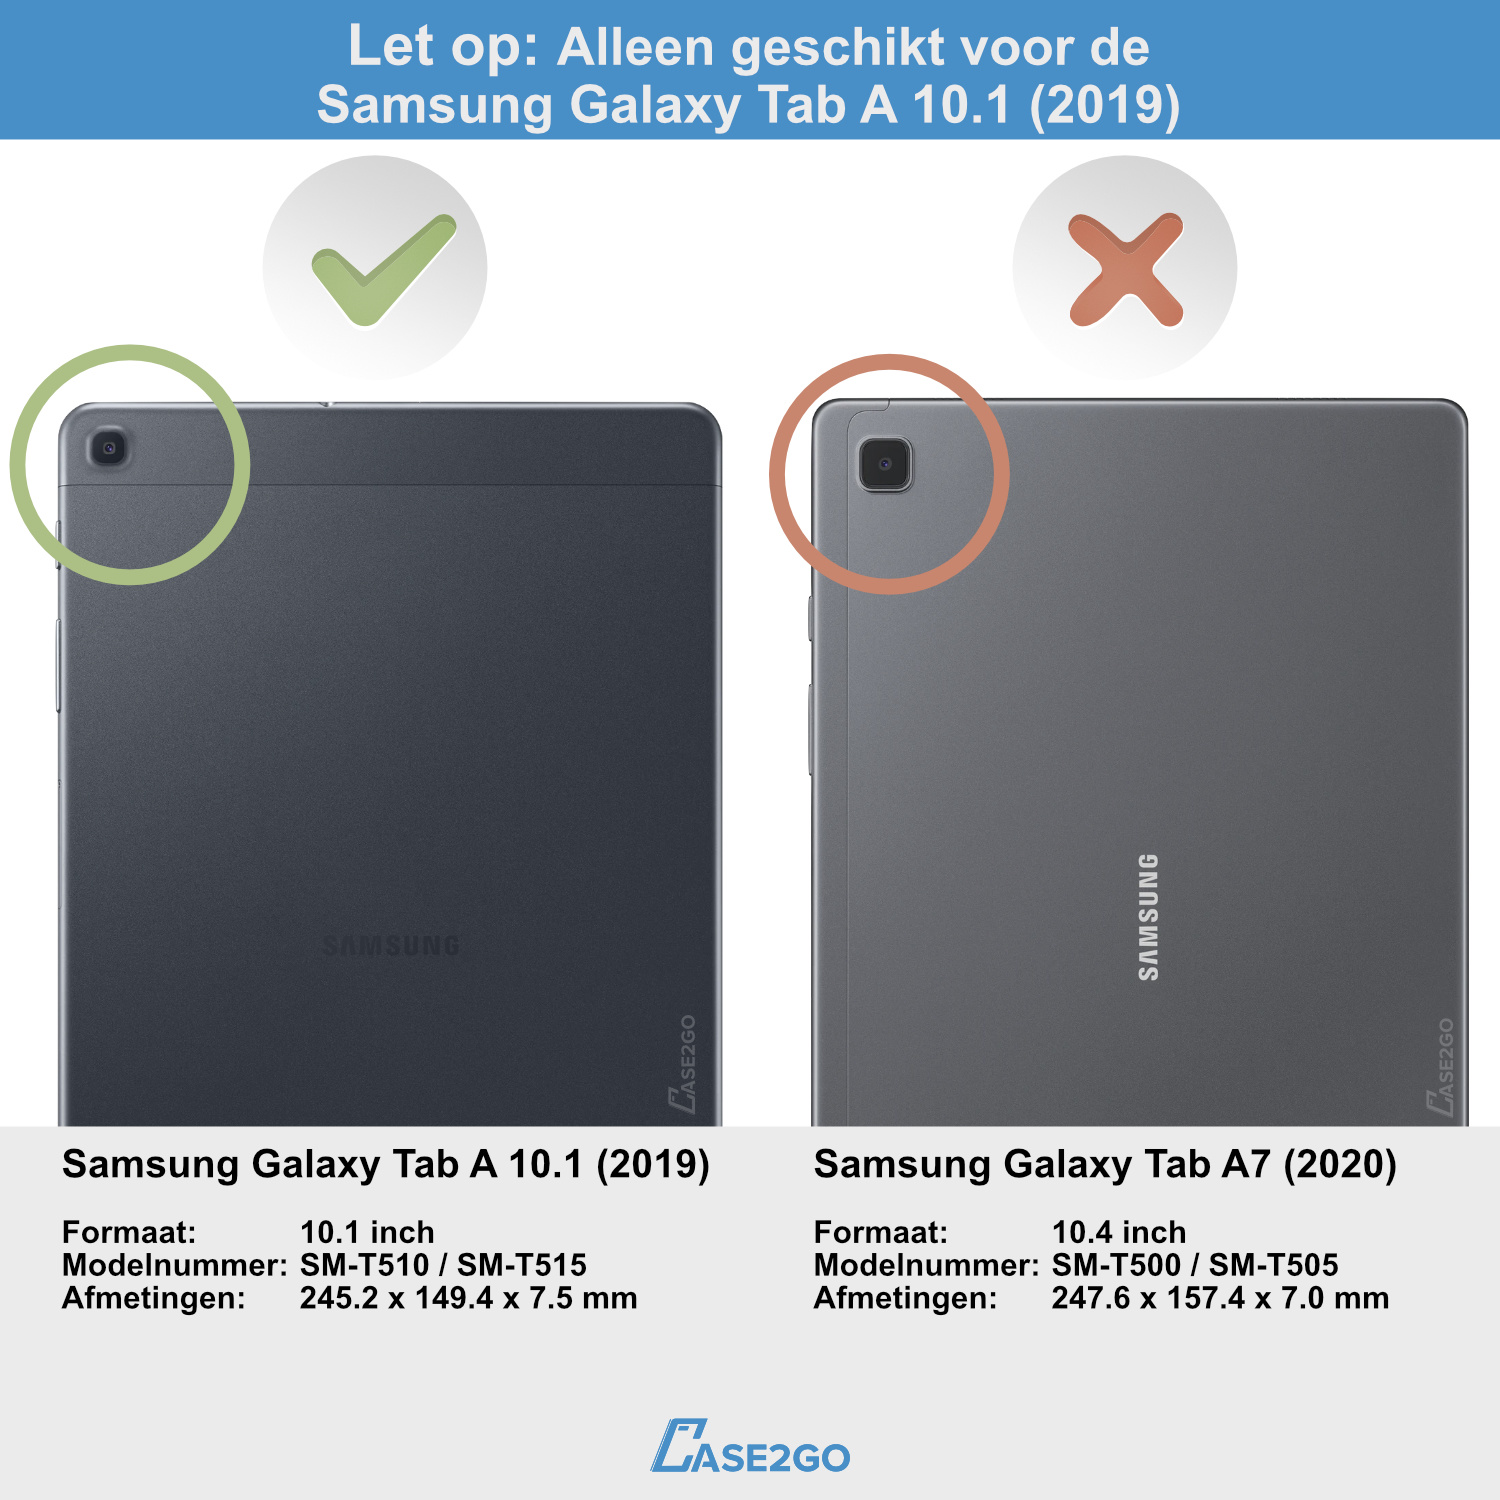 trog Middelen Fantasie Samsung Galaxy Tab A 2019 - Bluetooth toetsenbord hoes + Screenprotect |  Case2go.nl